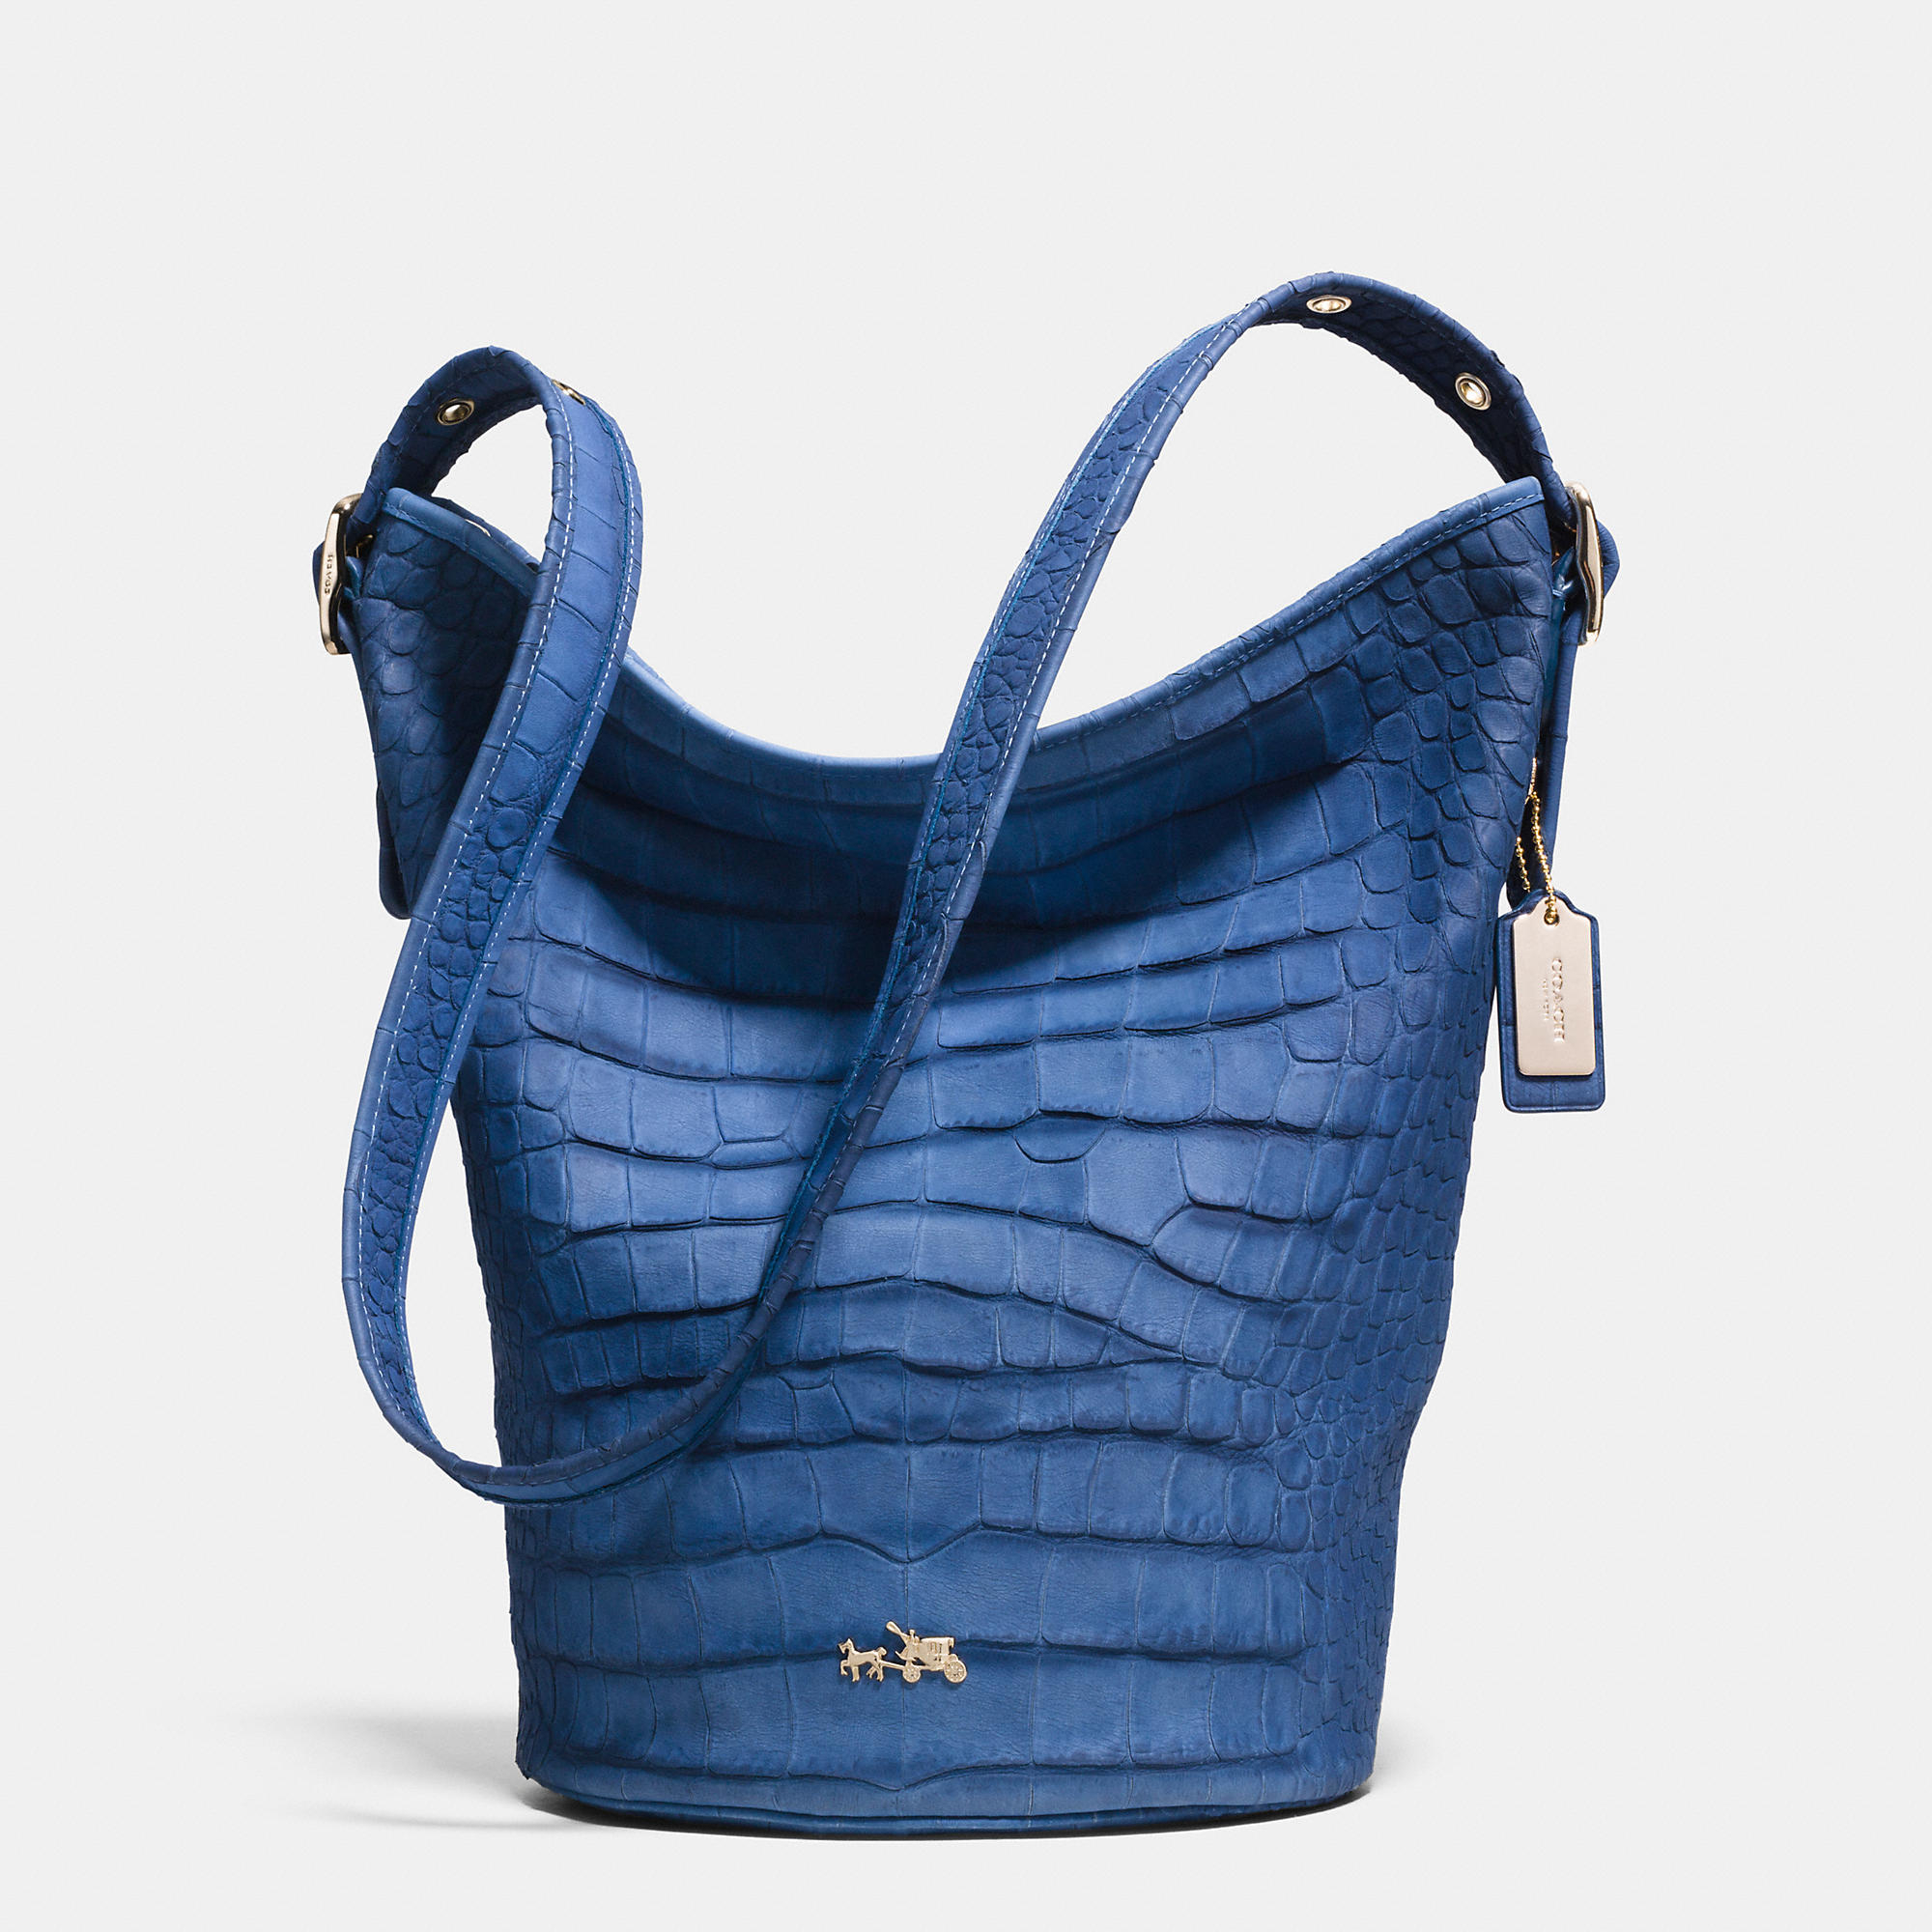 Lyst - Coach Duffle Shoulder Bag In Croc Embossed Denim Leather in Blue